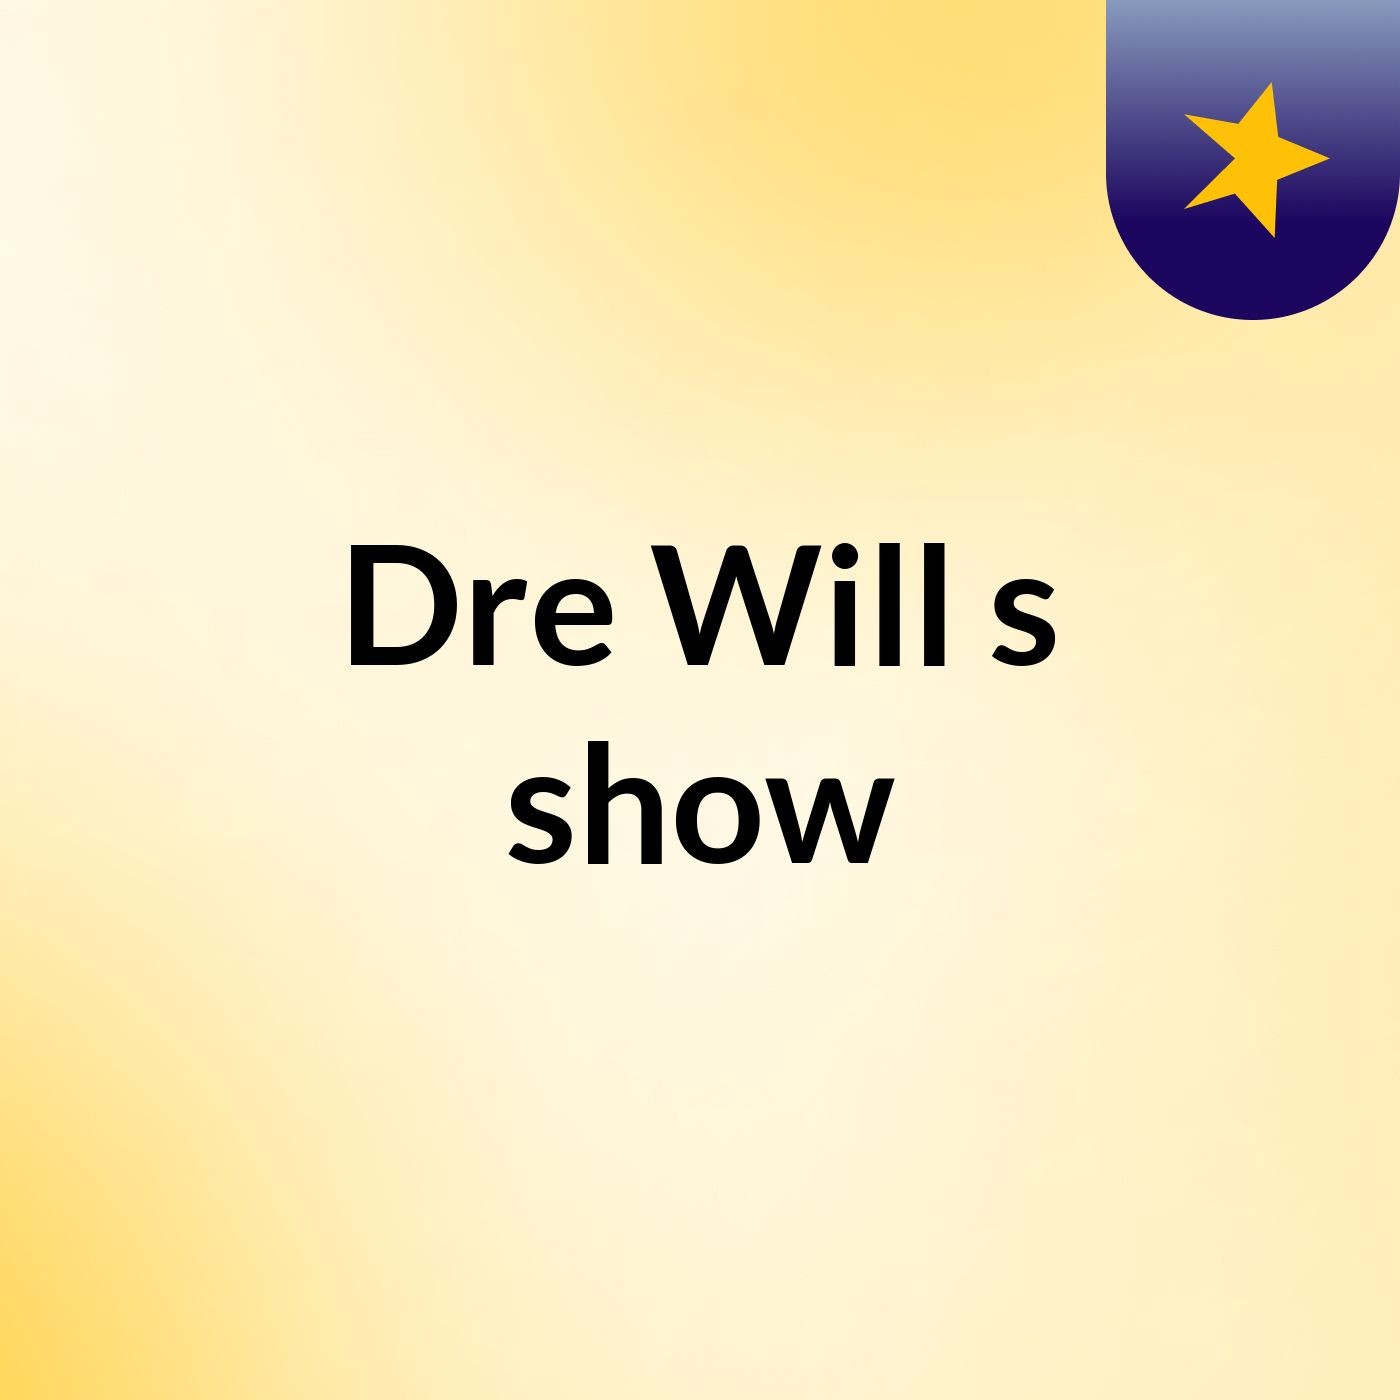 Dre Will's show